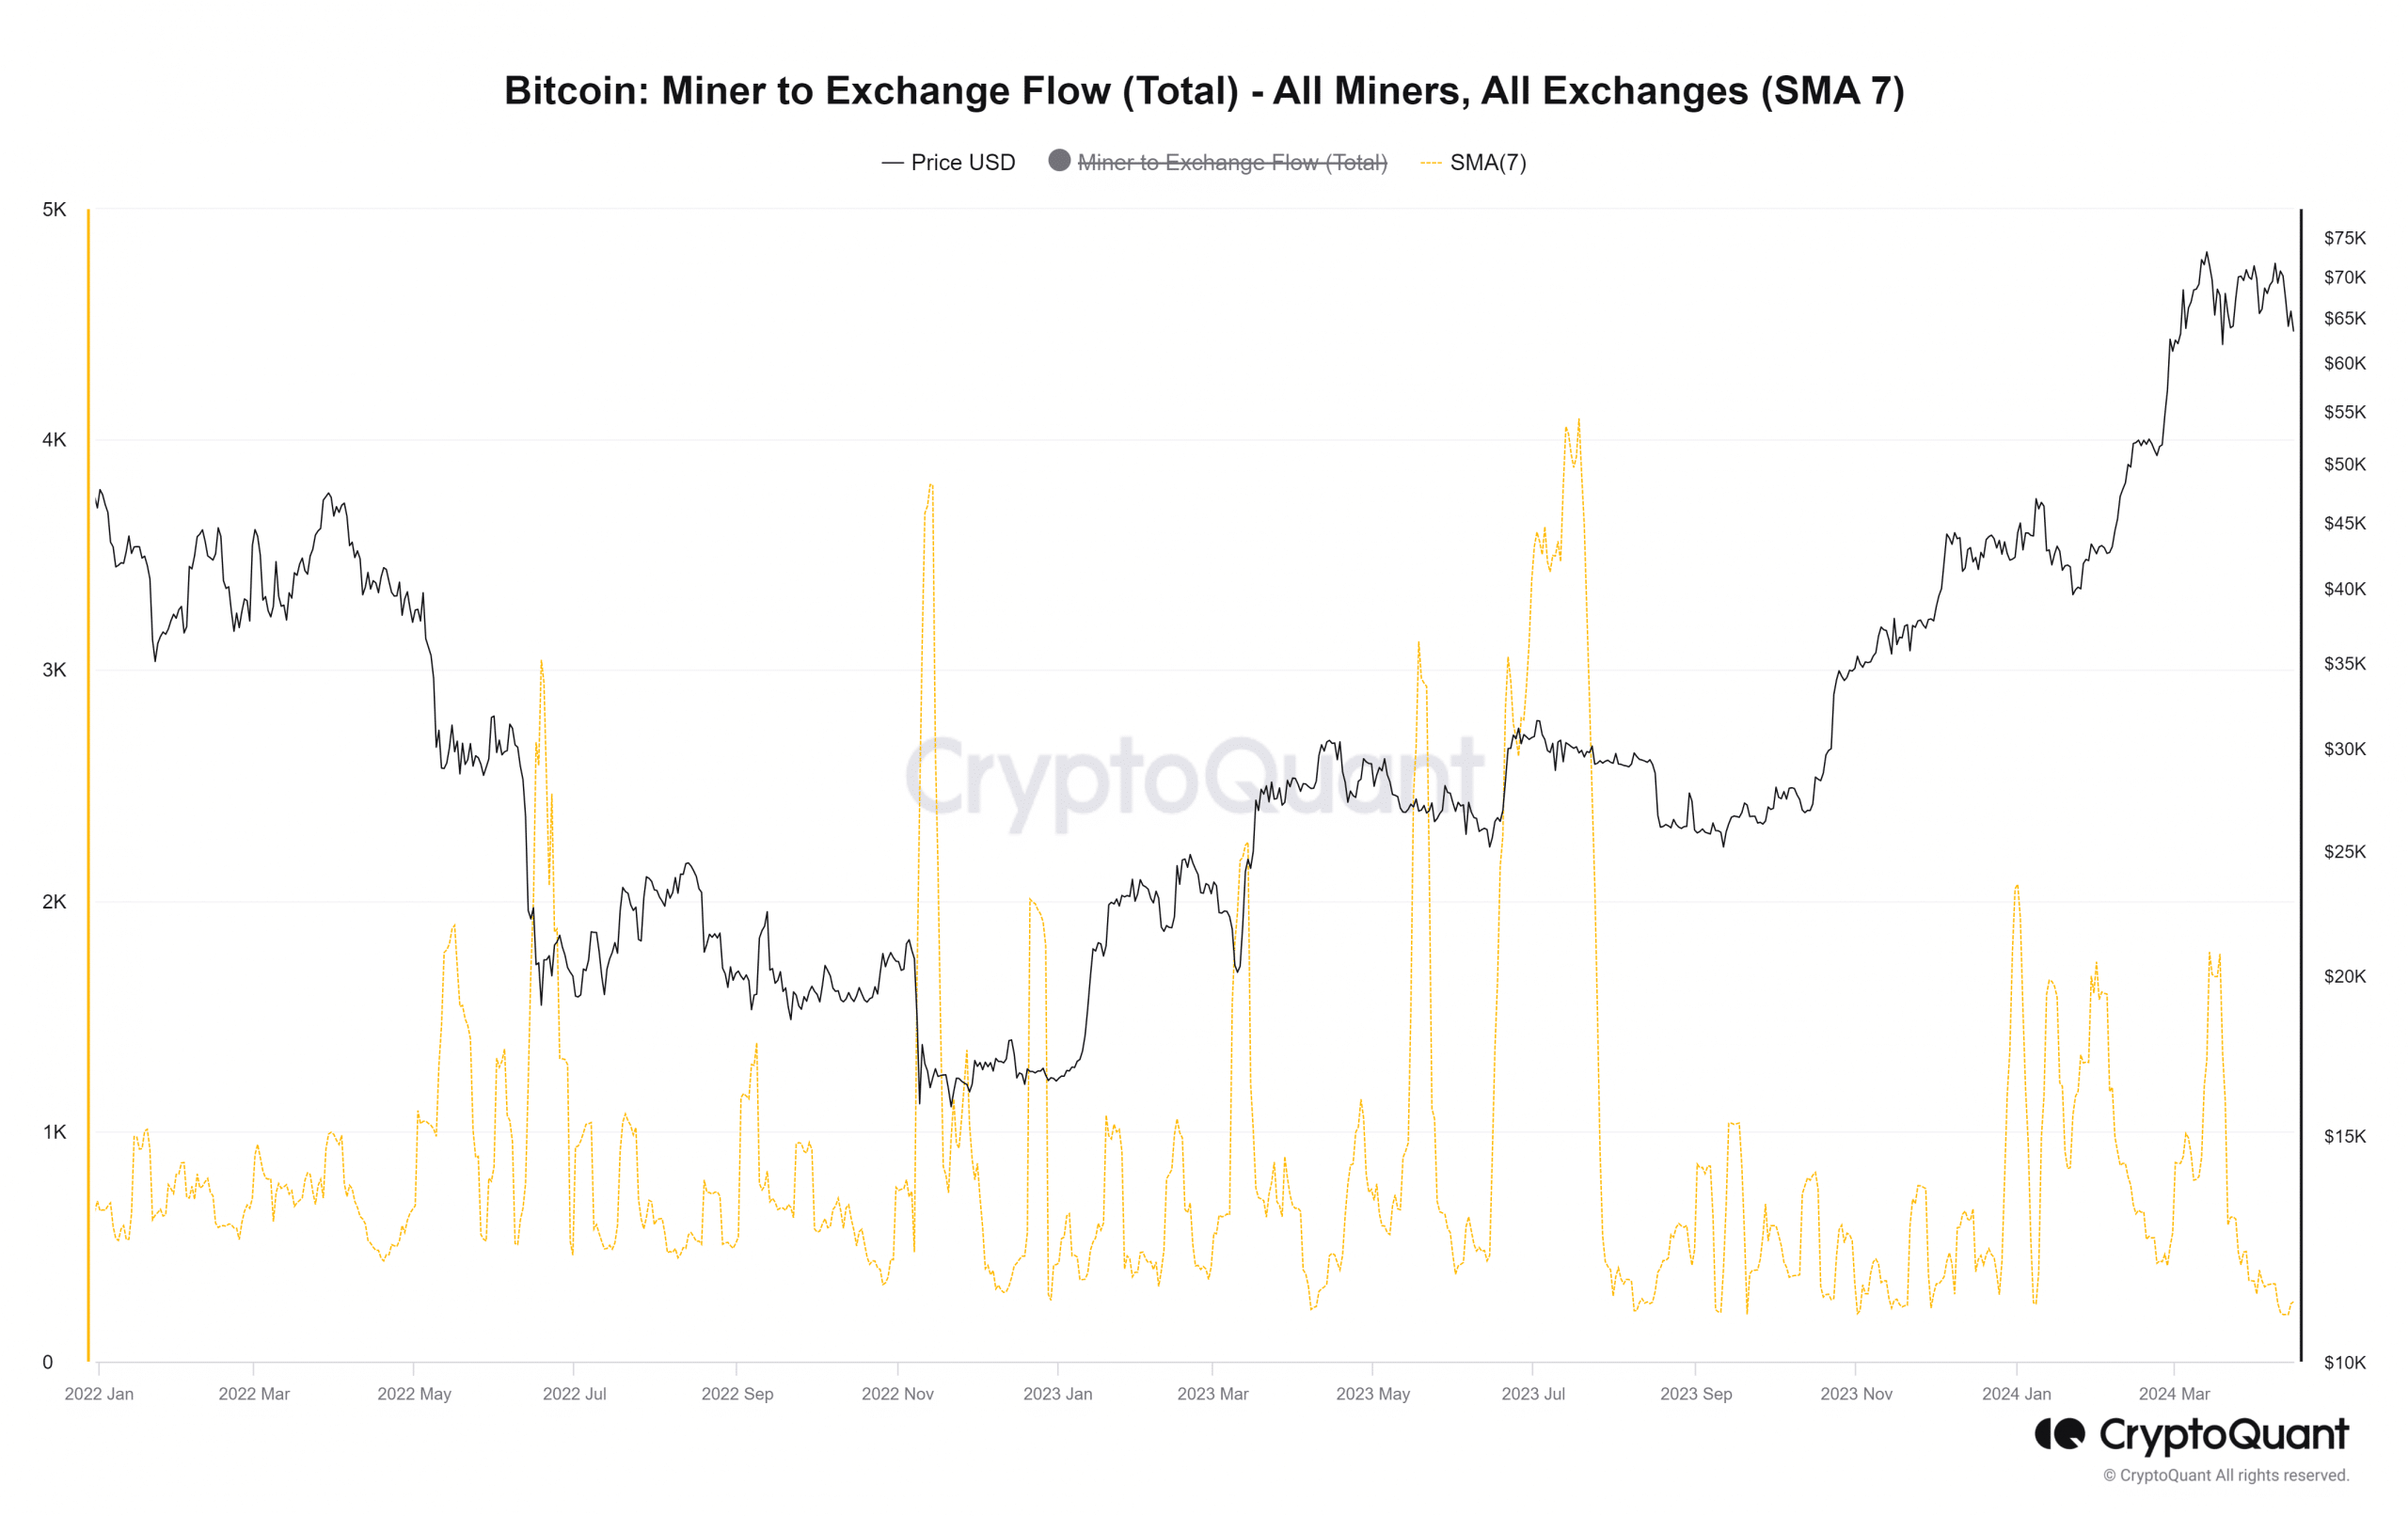 BTC Miner Flow to Exchanges